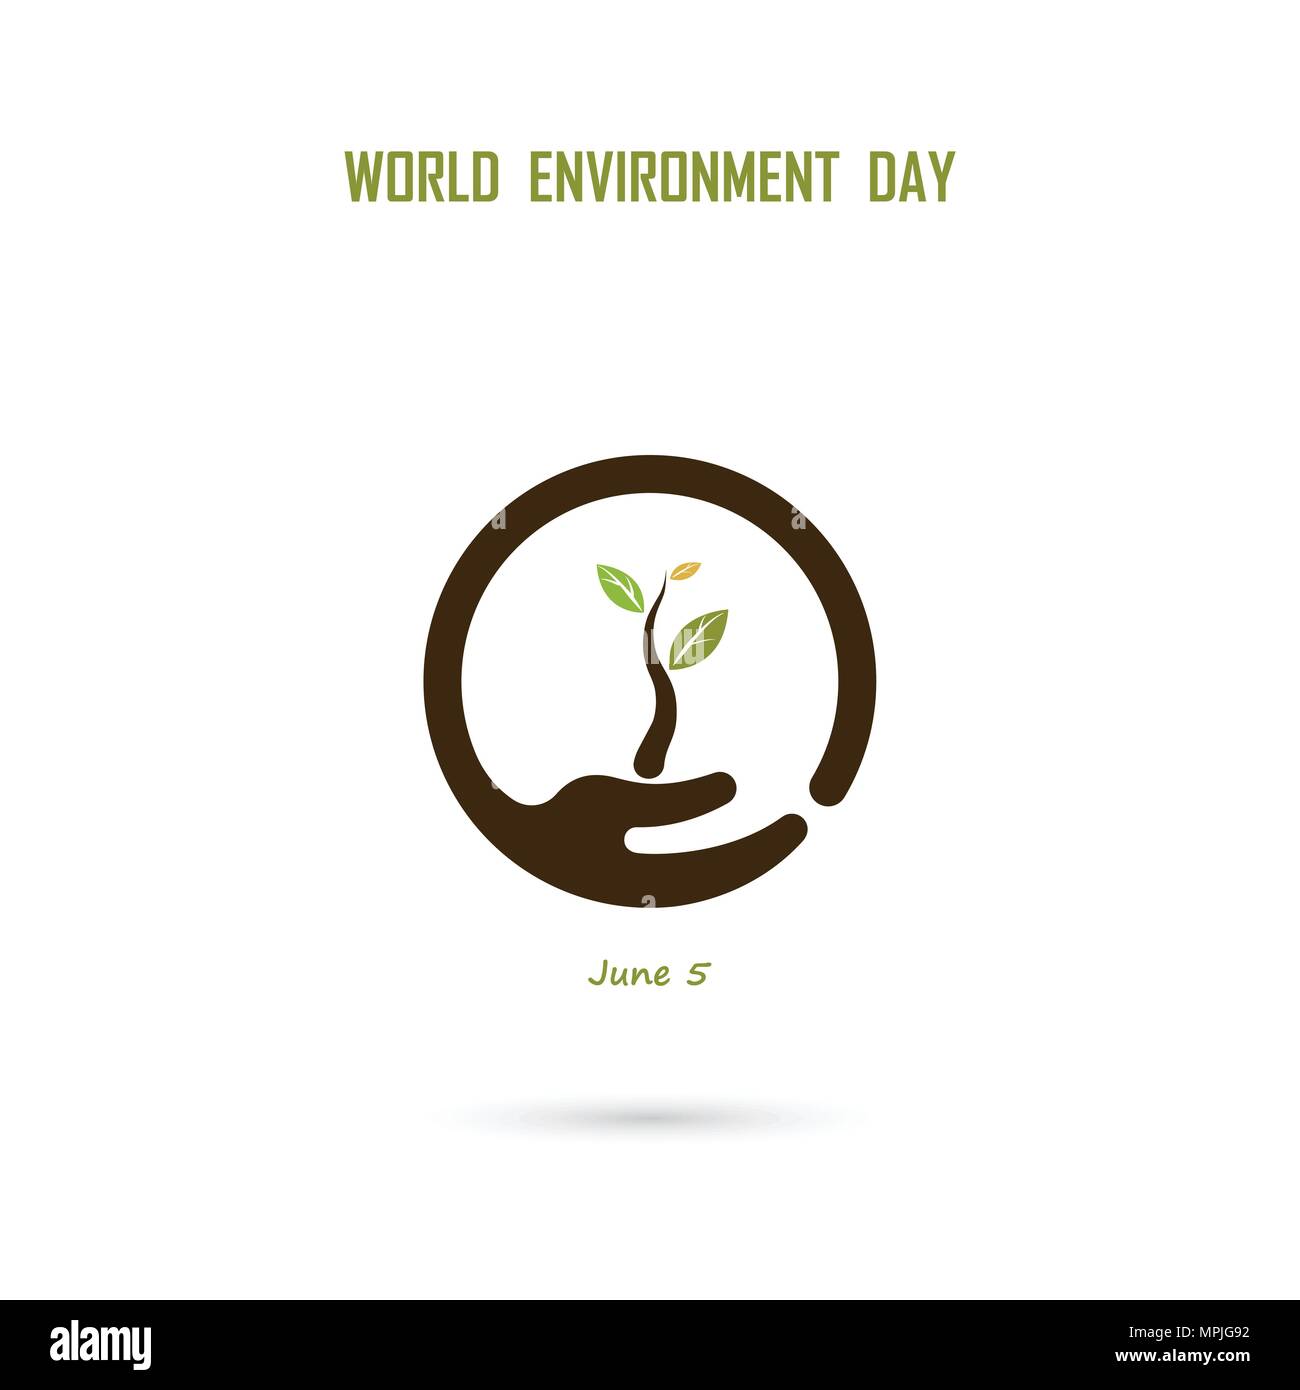 Environment Logos | BrandCrowd